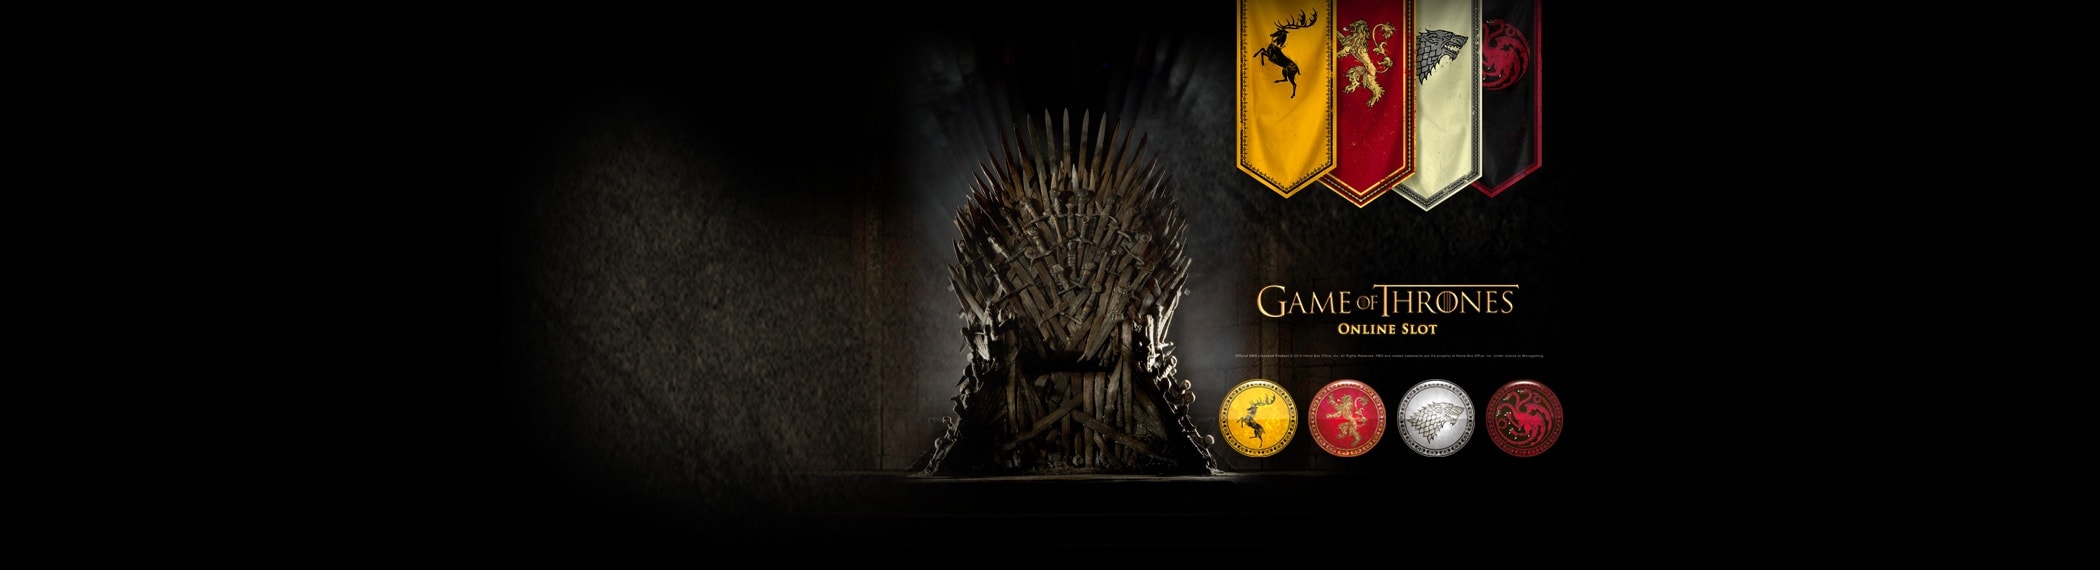 Mobile Slots Cash Wins Online | Game of Thrones Sign up Bonus